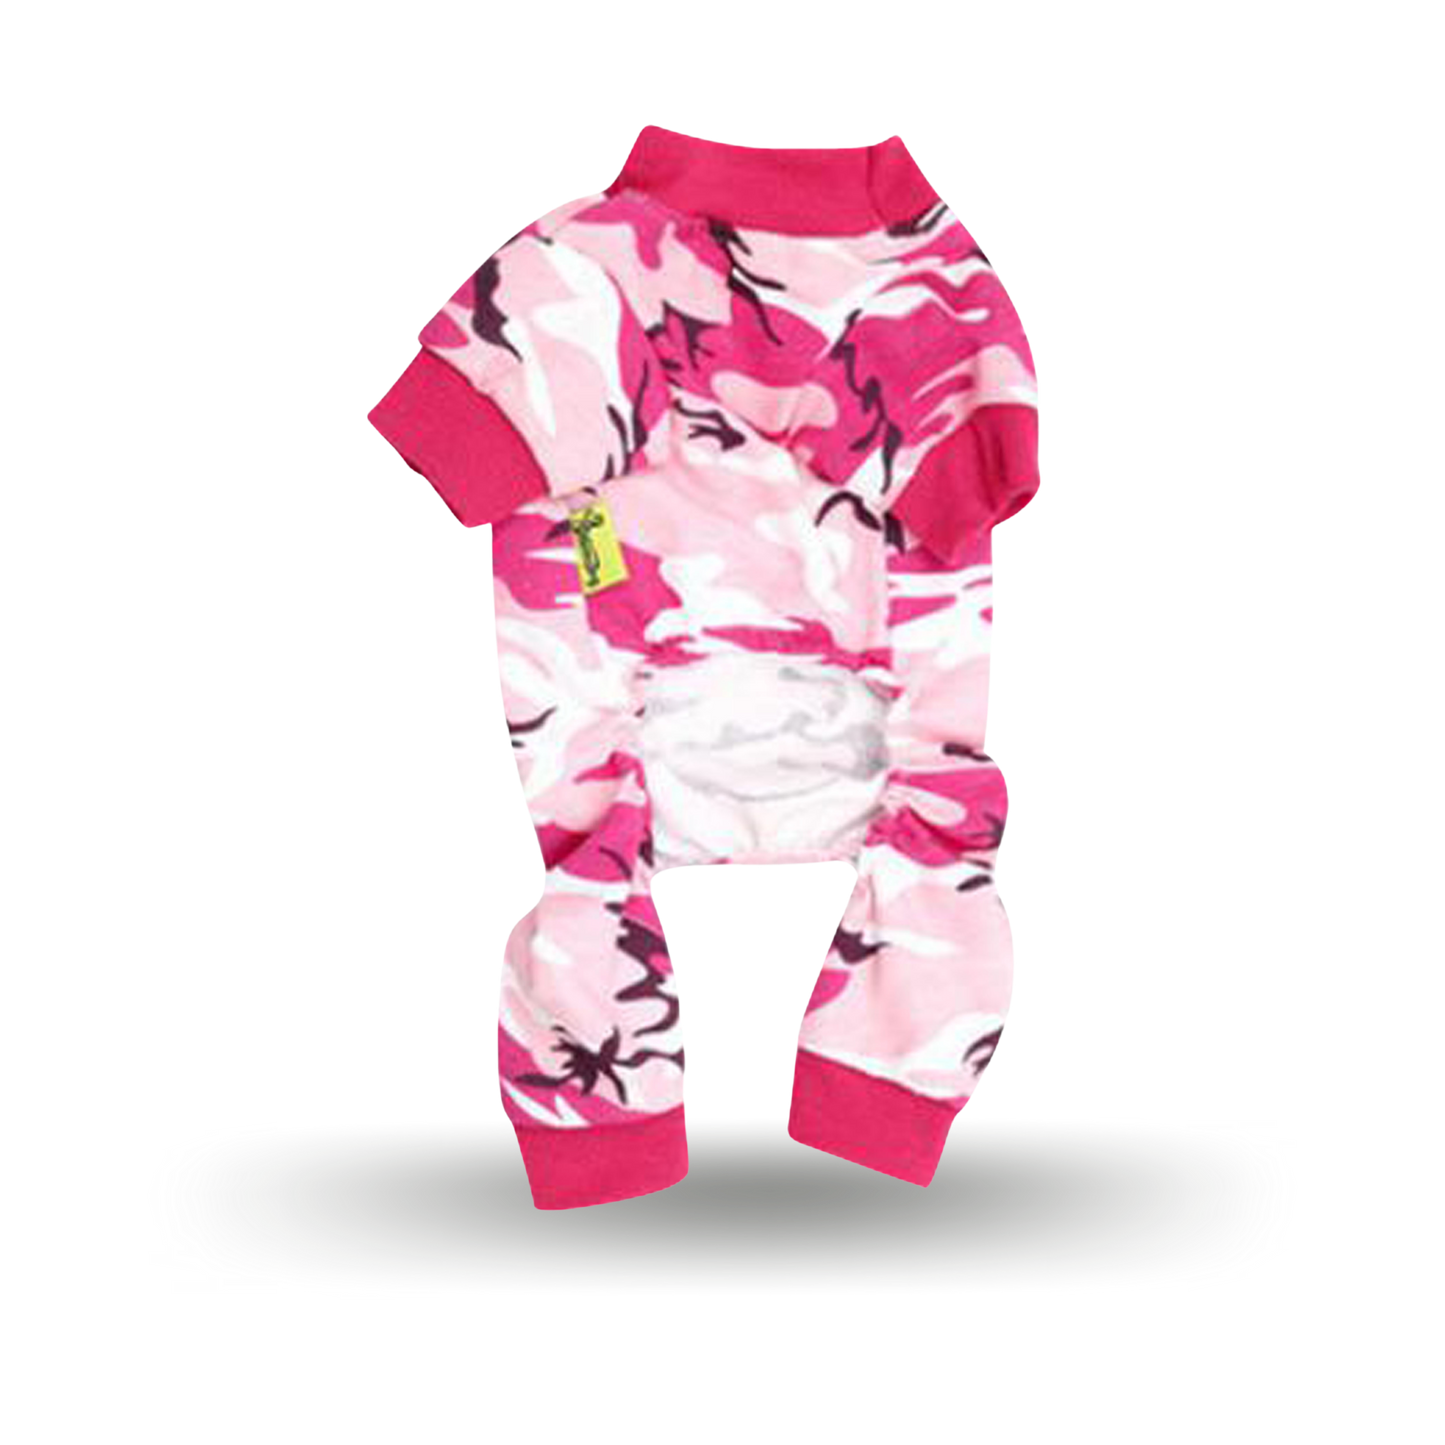 Camouflage Pug Summer Pyjamas